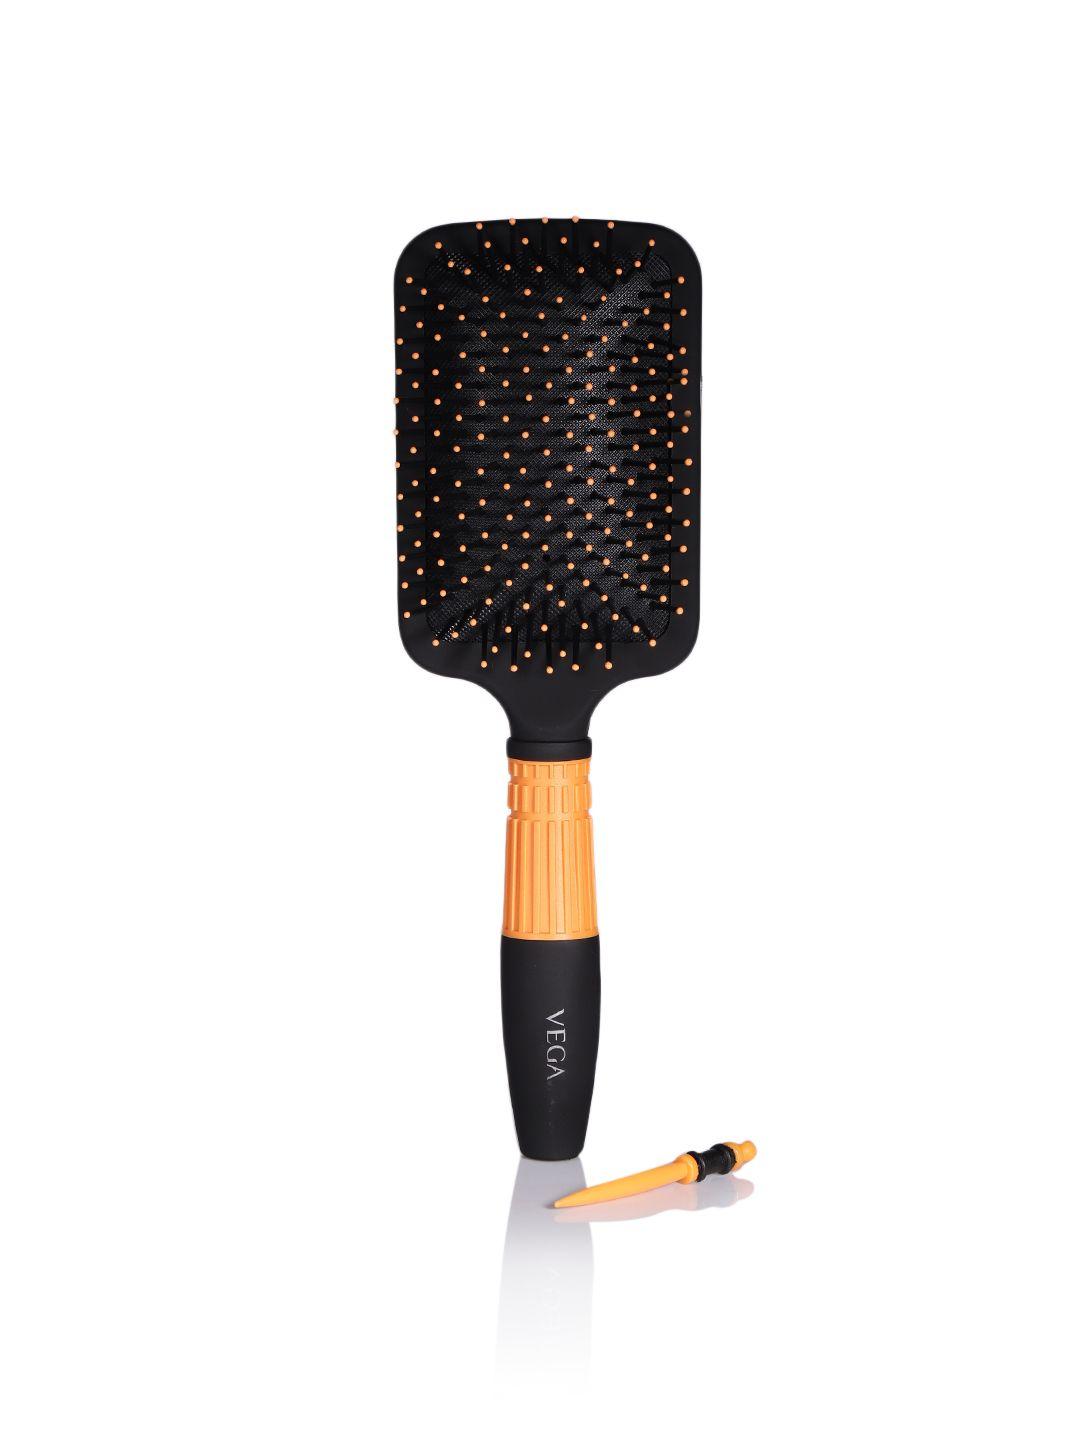 vega unisex black & orange paddle hair brush e15-pb